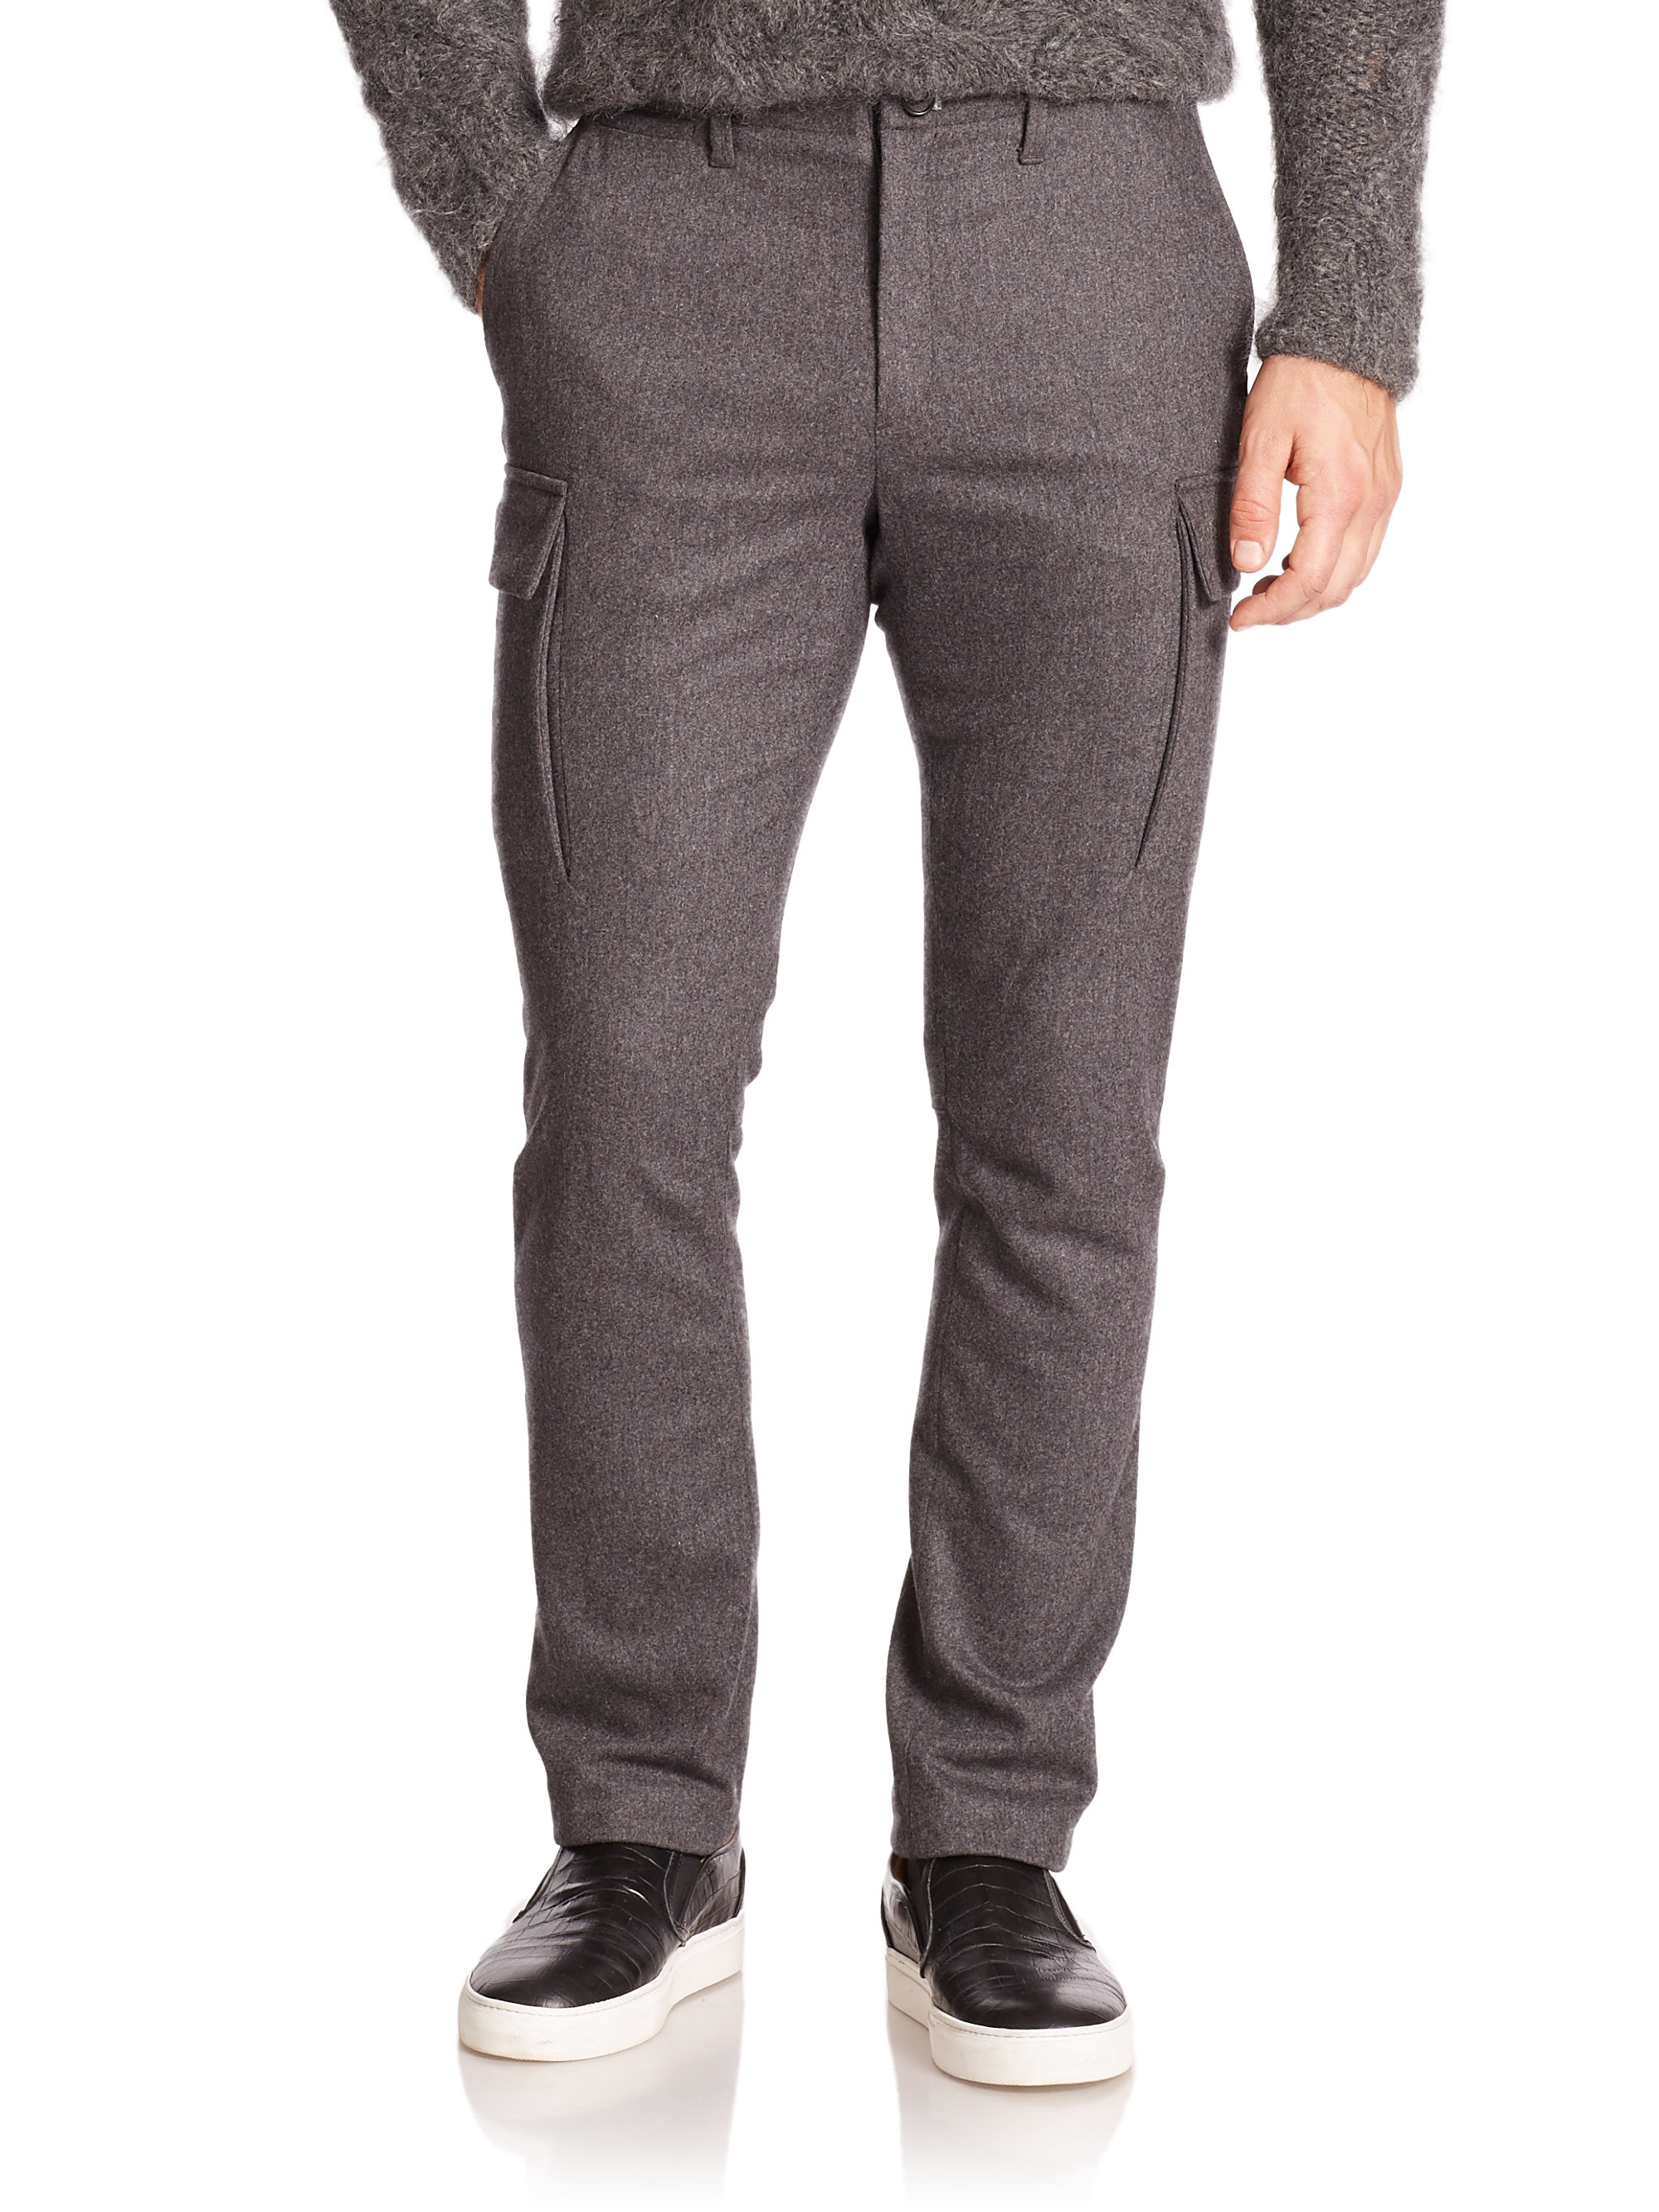 Lyst - Michael Kors Wool Blend Slim Cargo Pants in Gray for Men